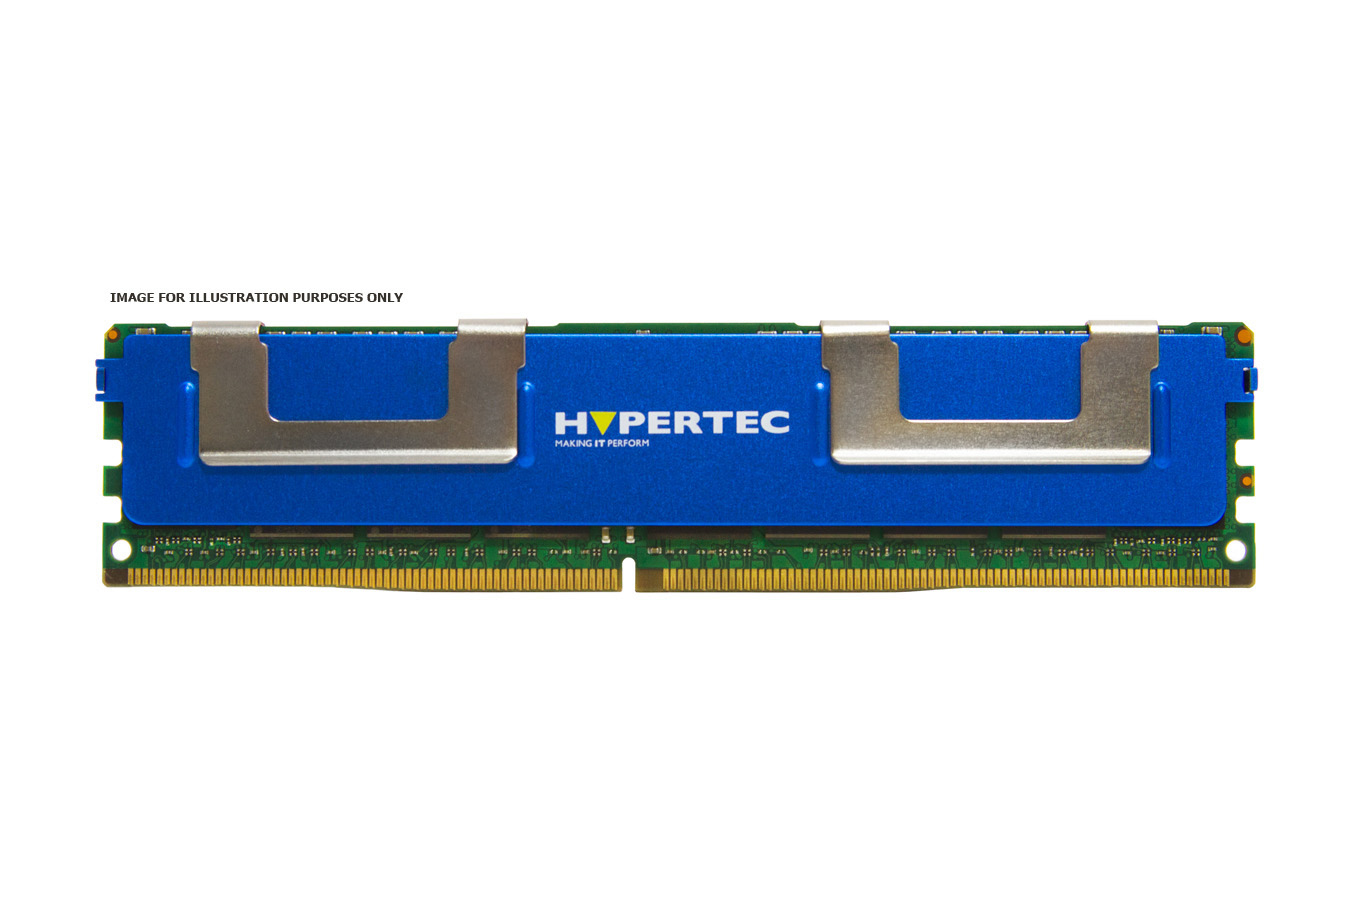 Hypertec 682415-001-HY memory module 16 GB DDR3 1600 MHz ECC